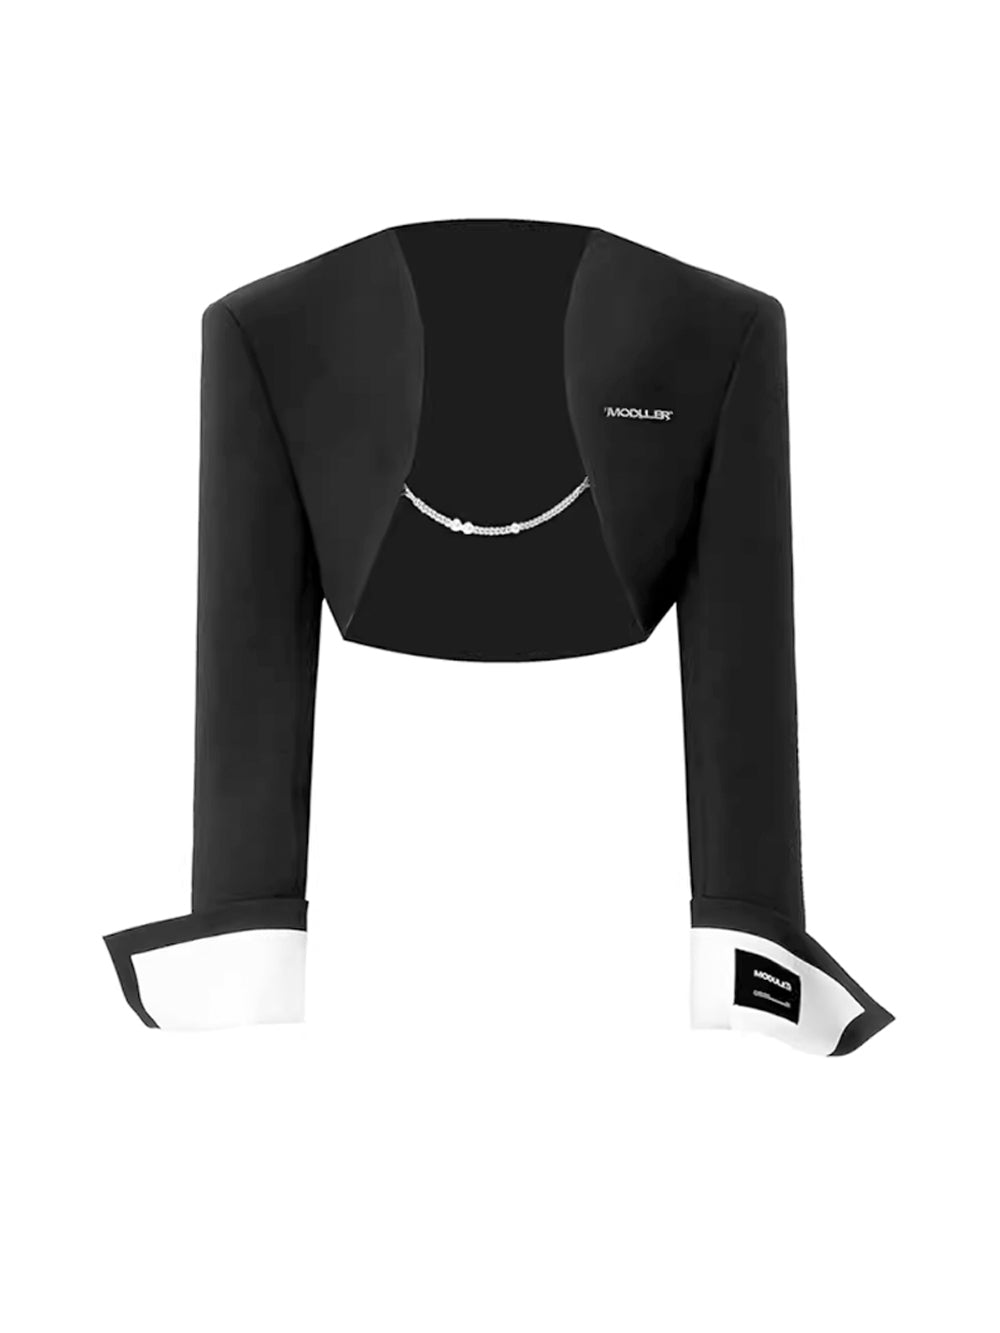 MUKTANK×MODULER Pearl Chain Classic Fashion New Set Suit Shirts